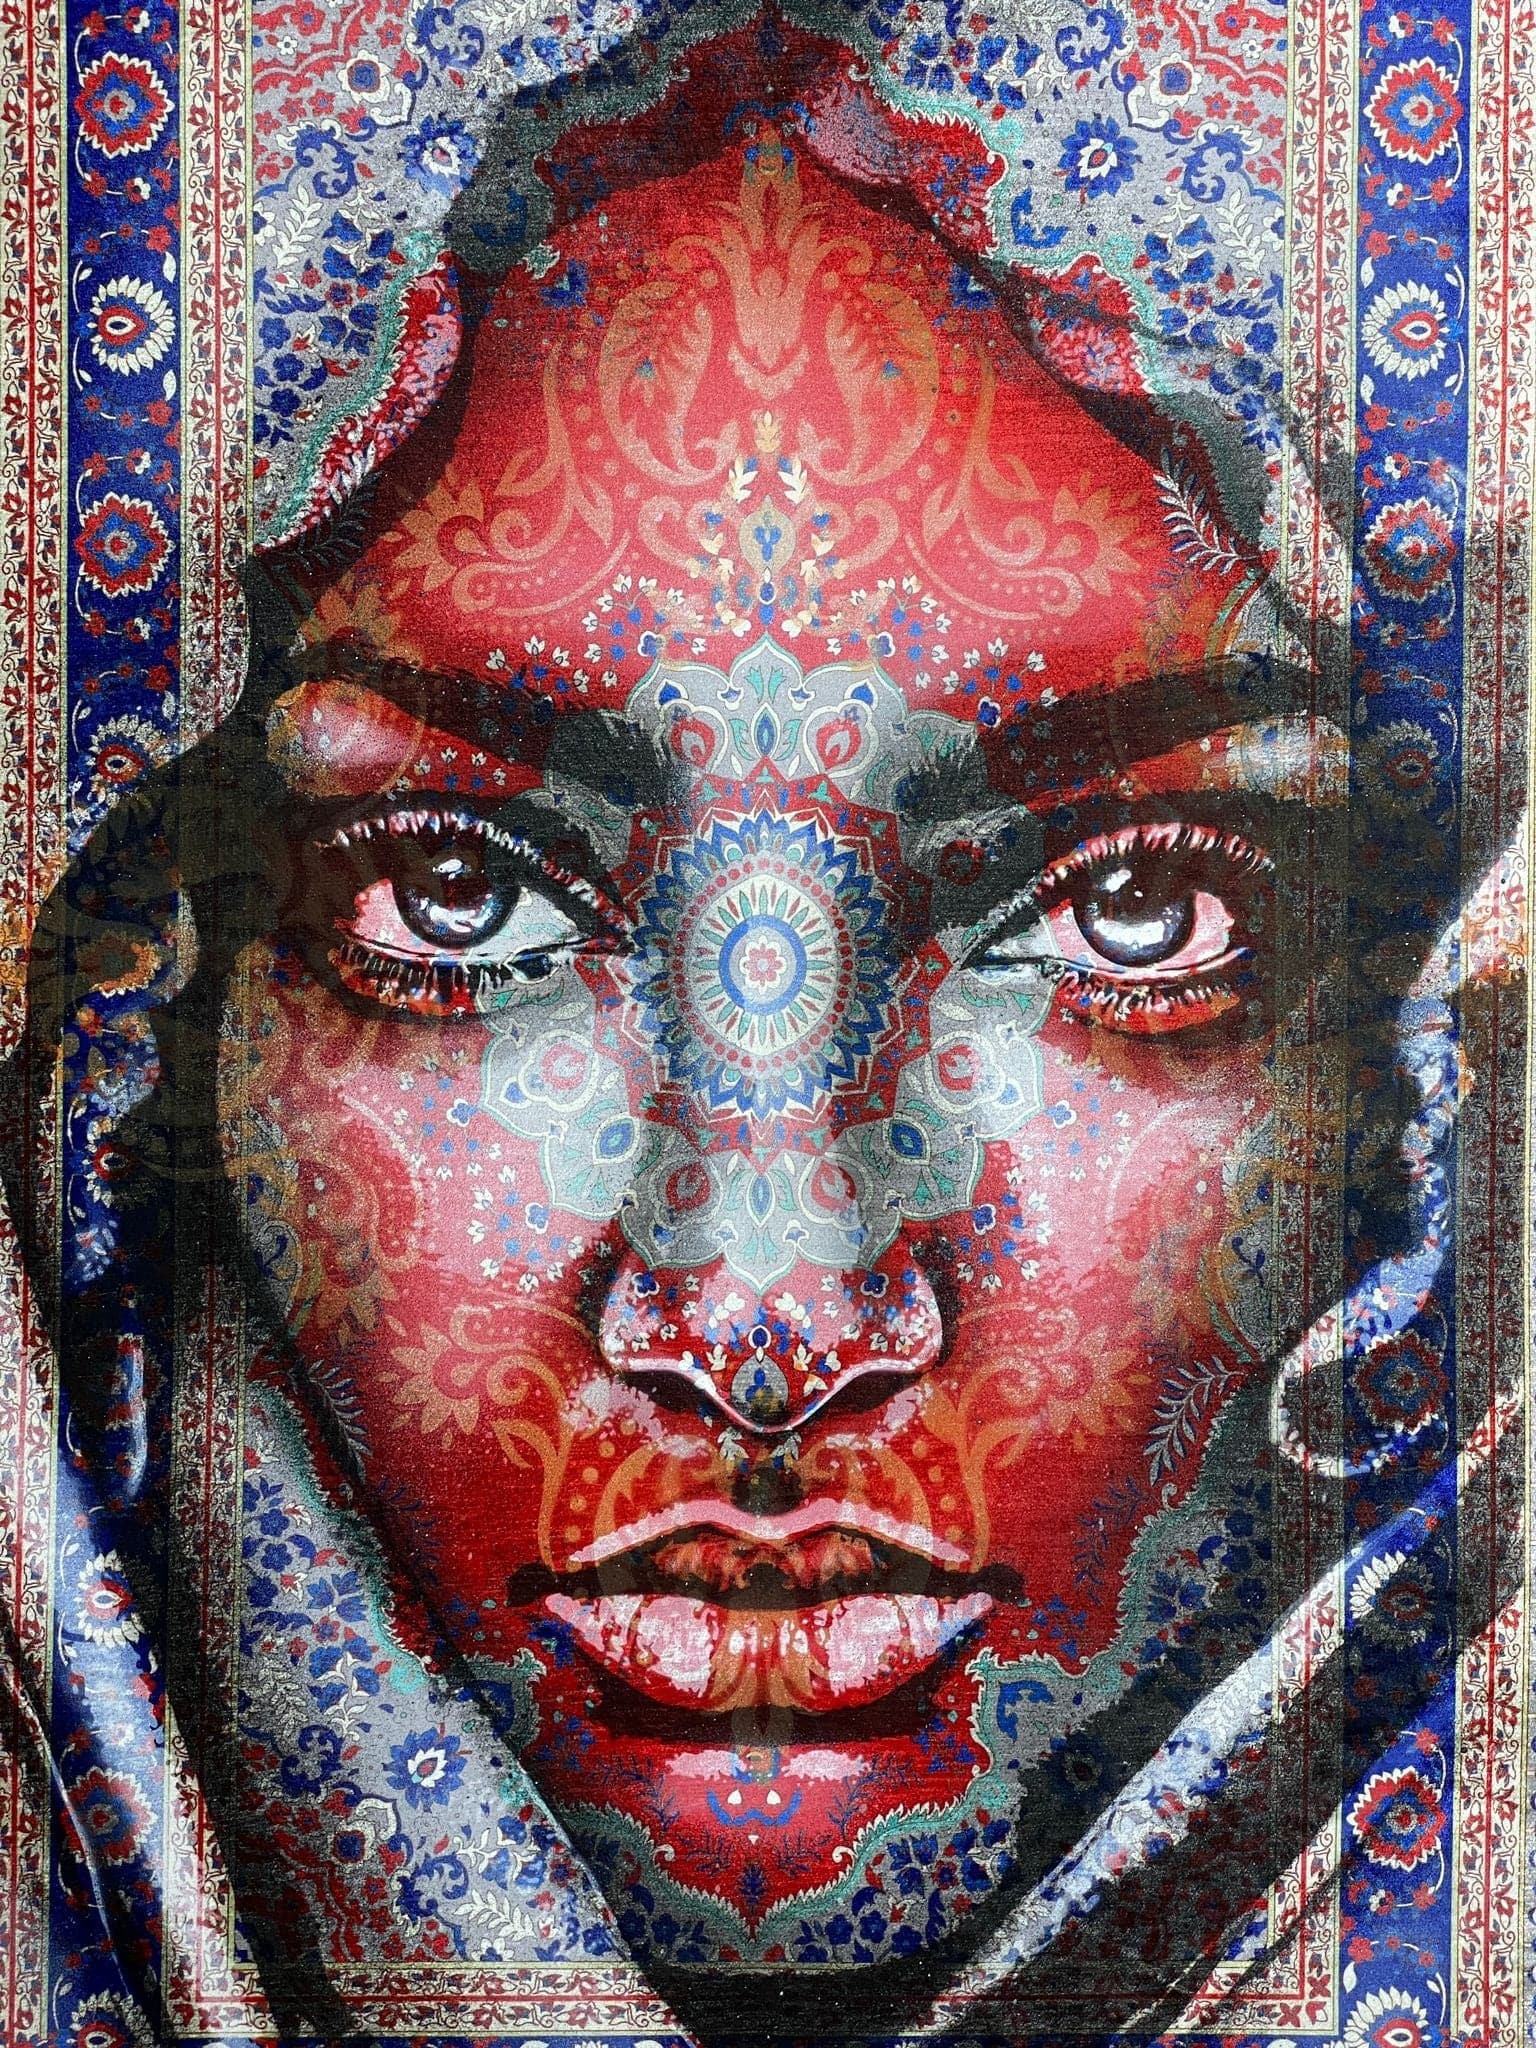 Image of Framed Roya, Original on Carpet artwork by Mateo Humano, free delivery